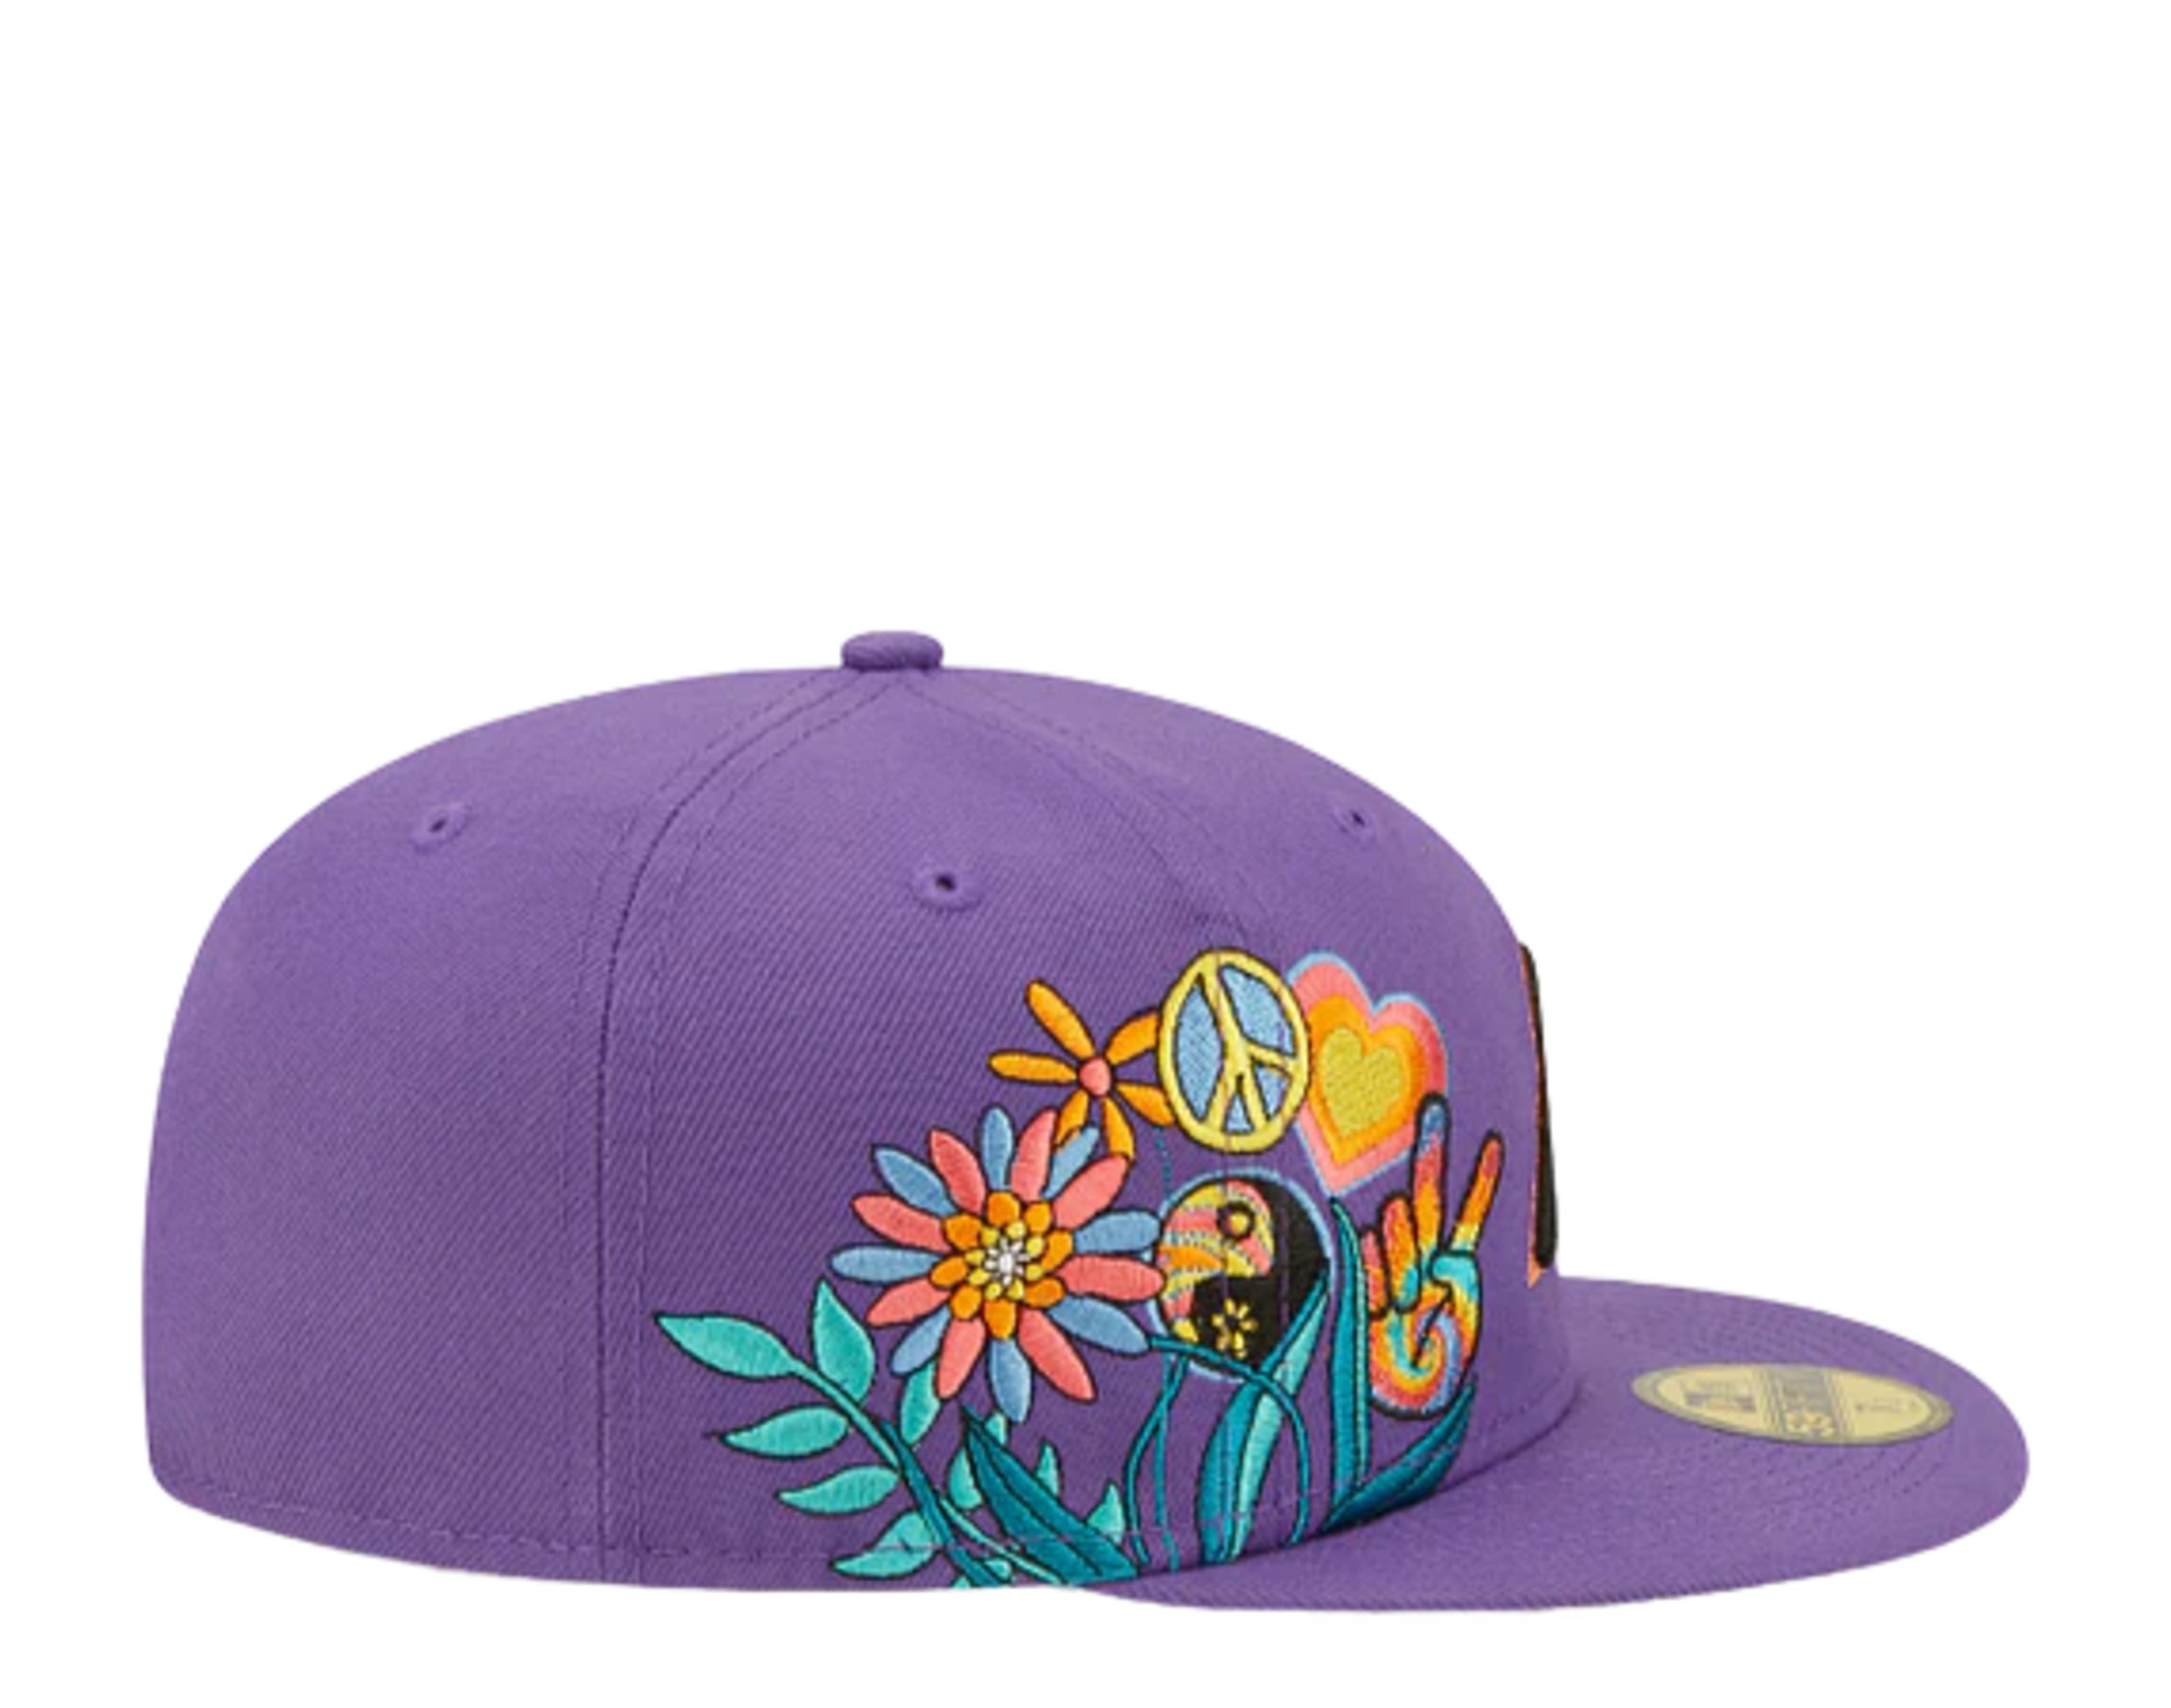 Arizona Diamondbacks GROOVY Purple Fitted Hat by New Era